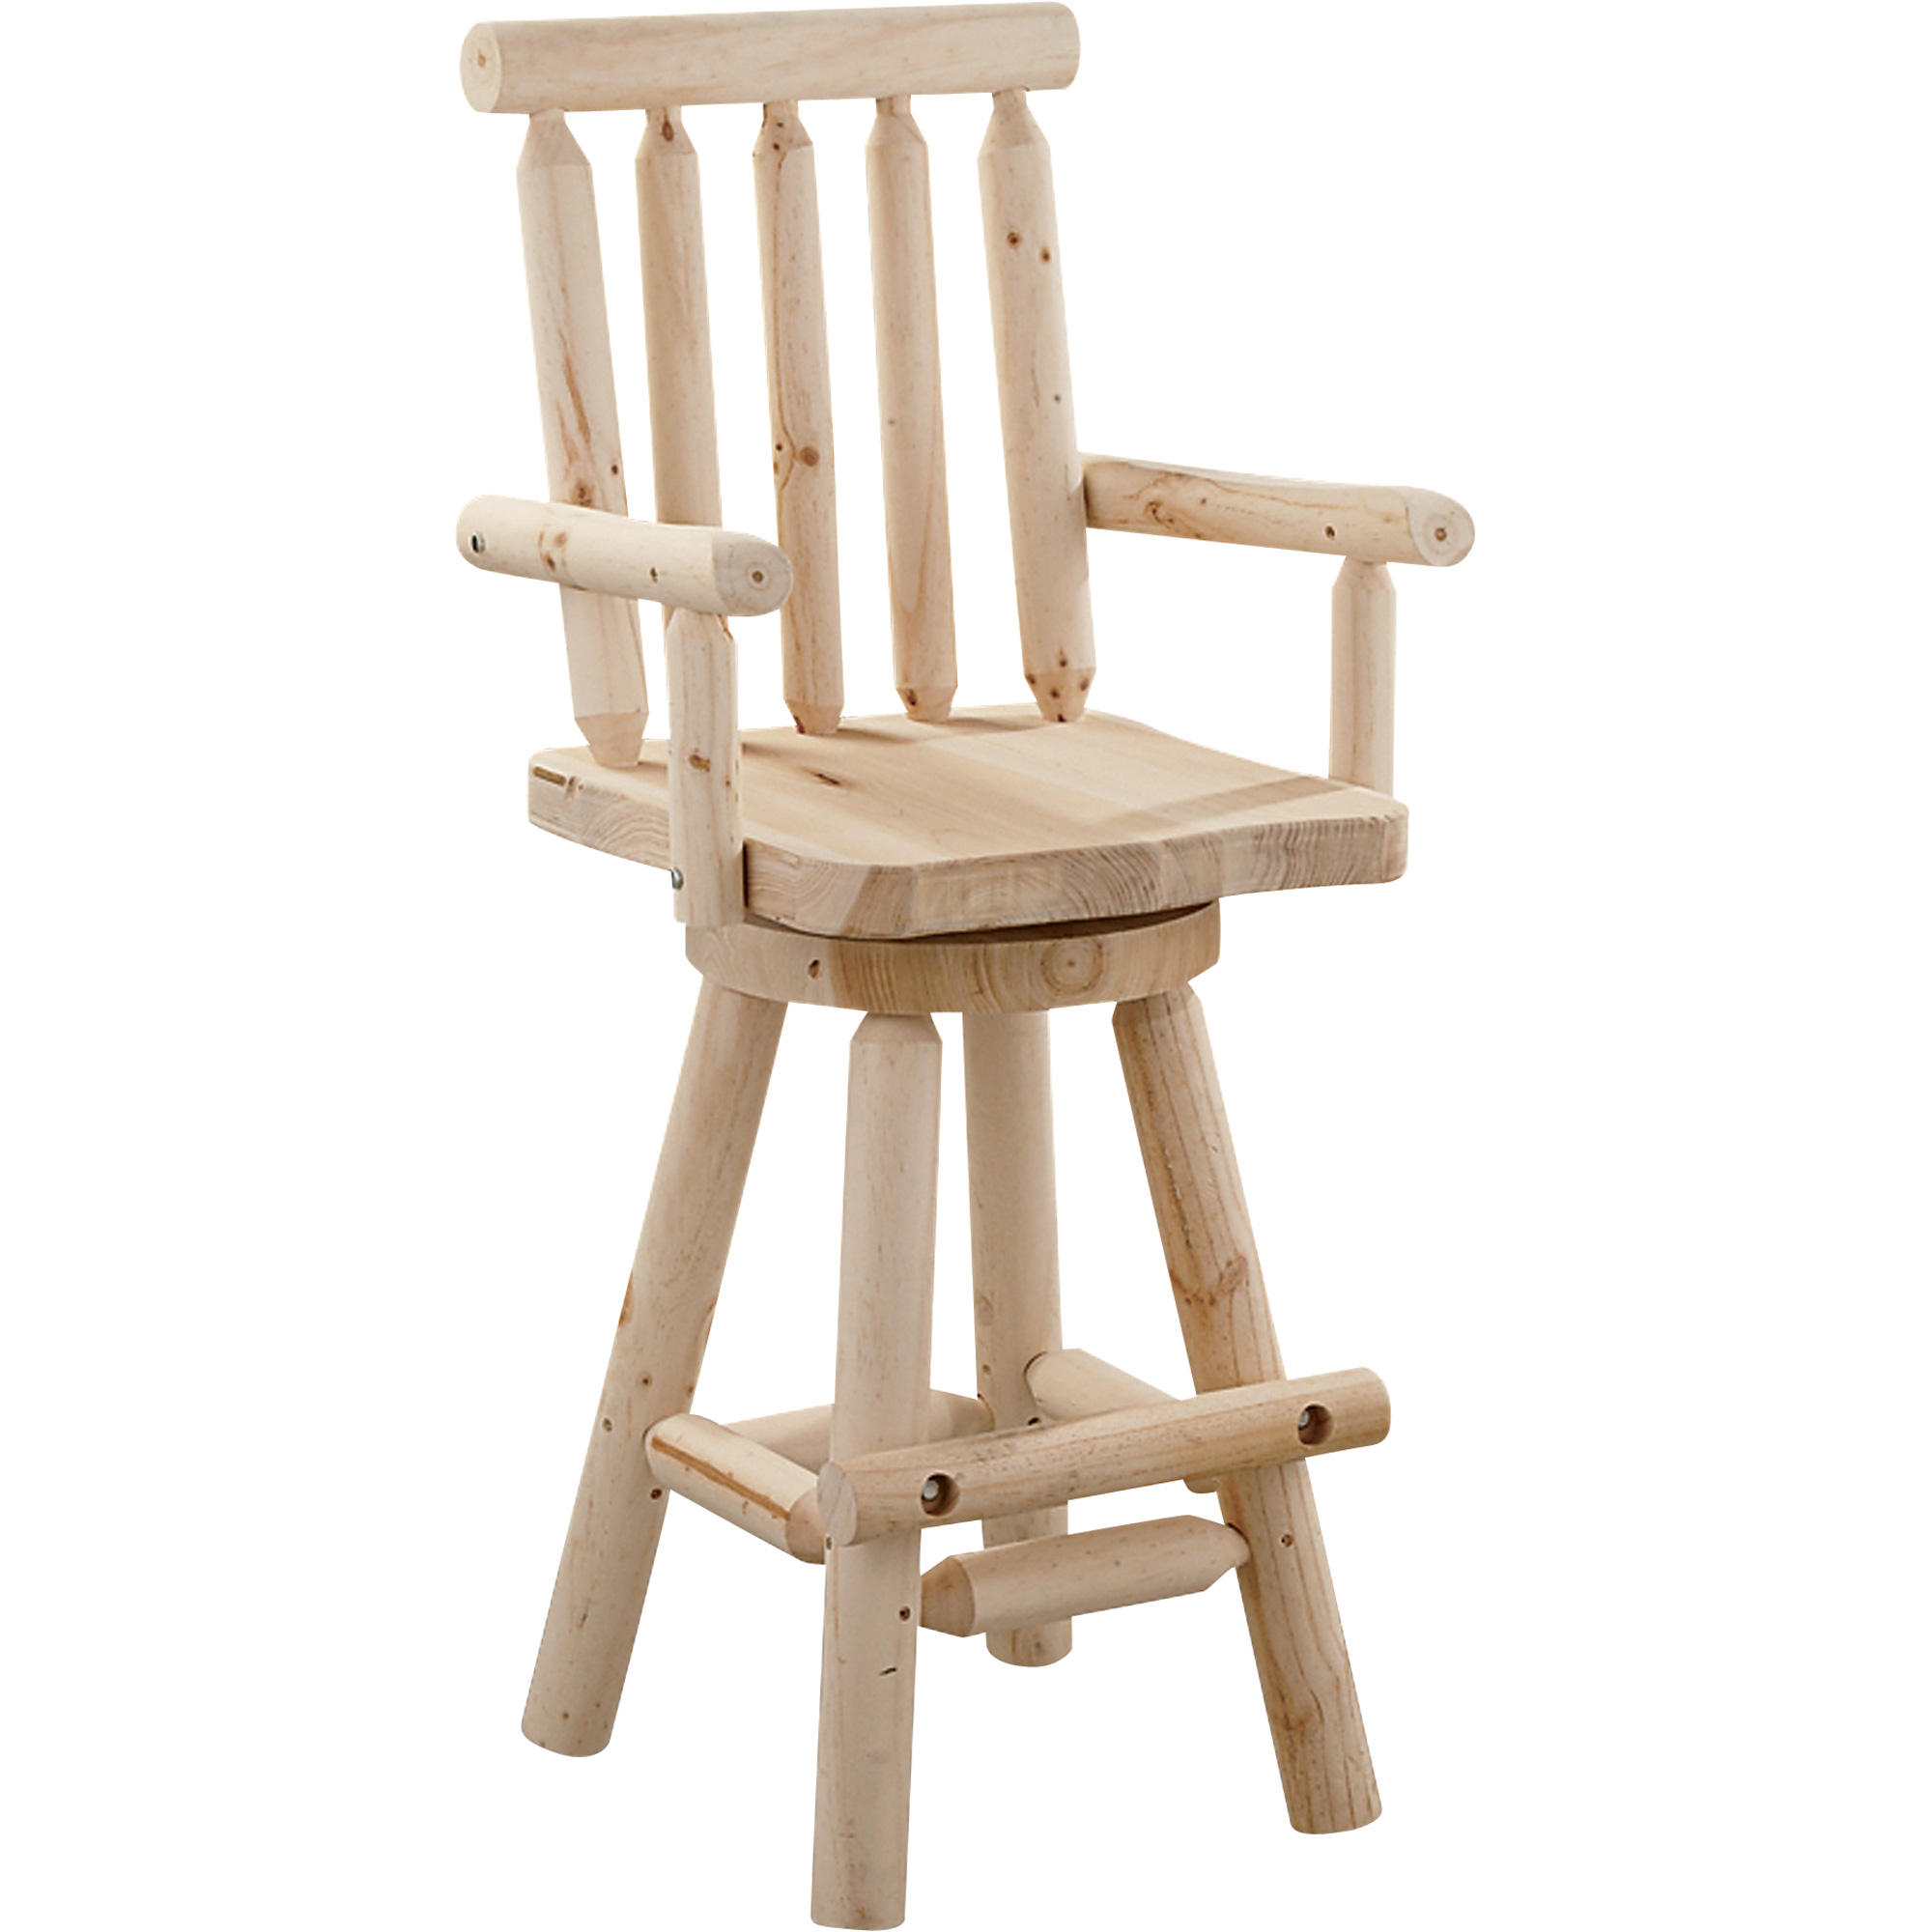 Diy kids wooden chair